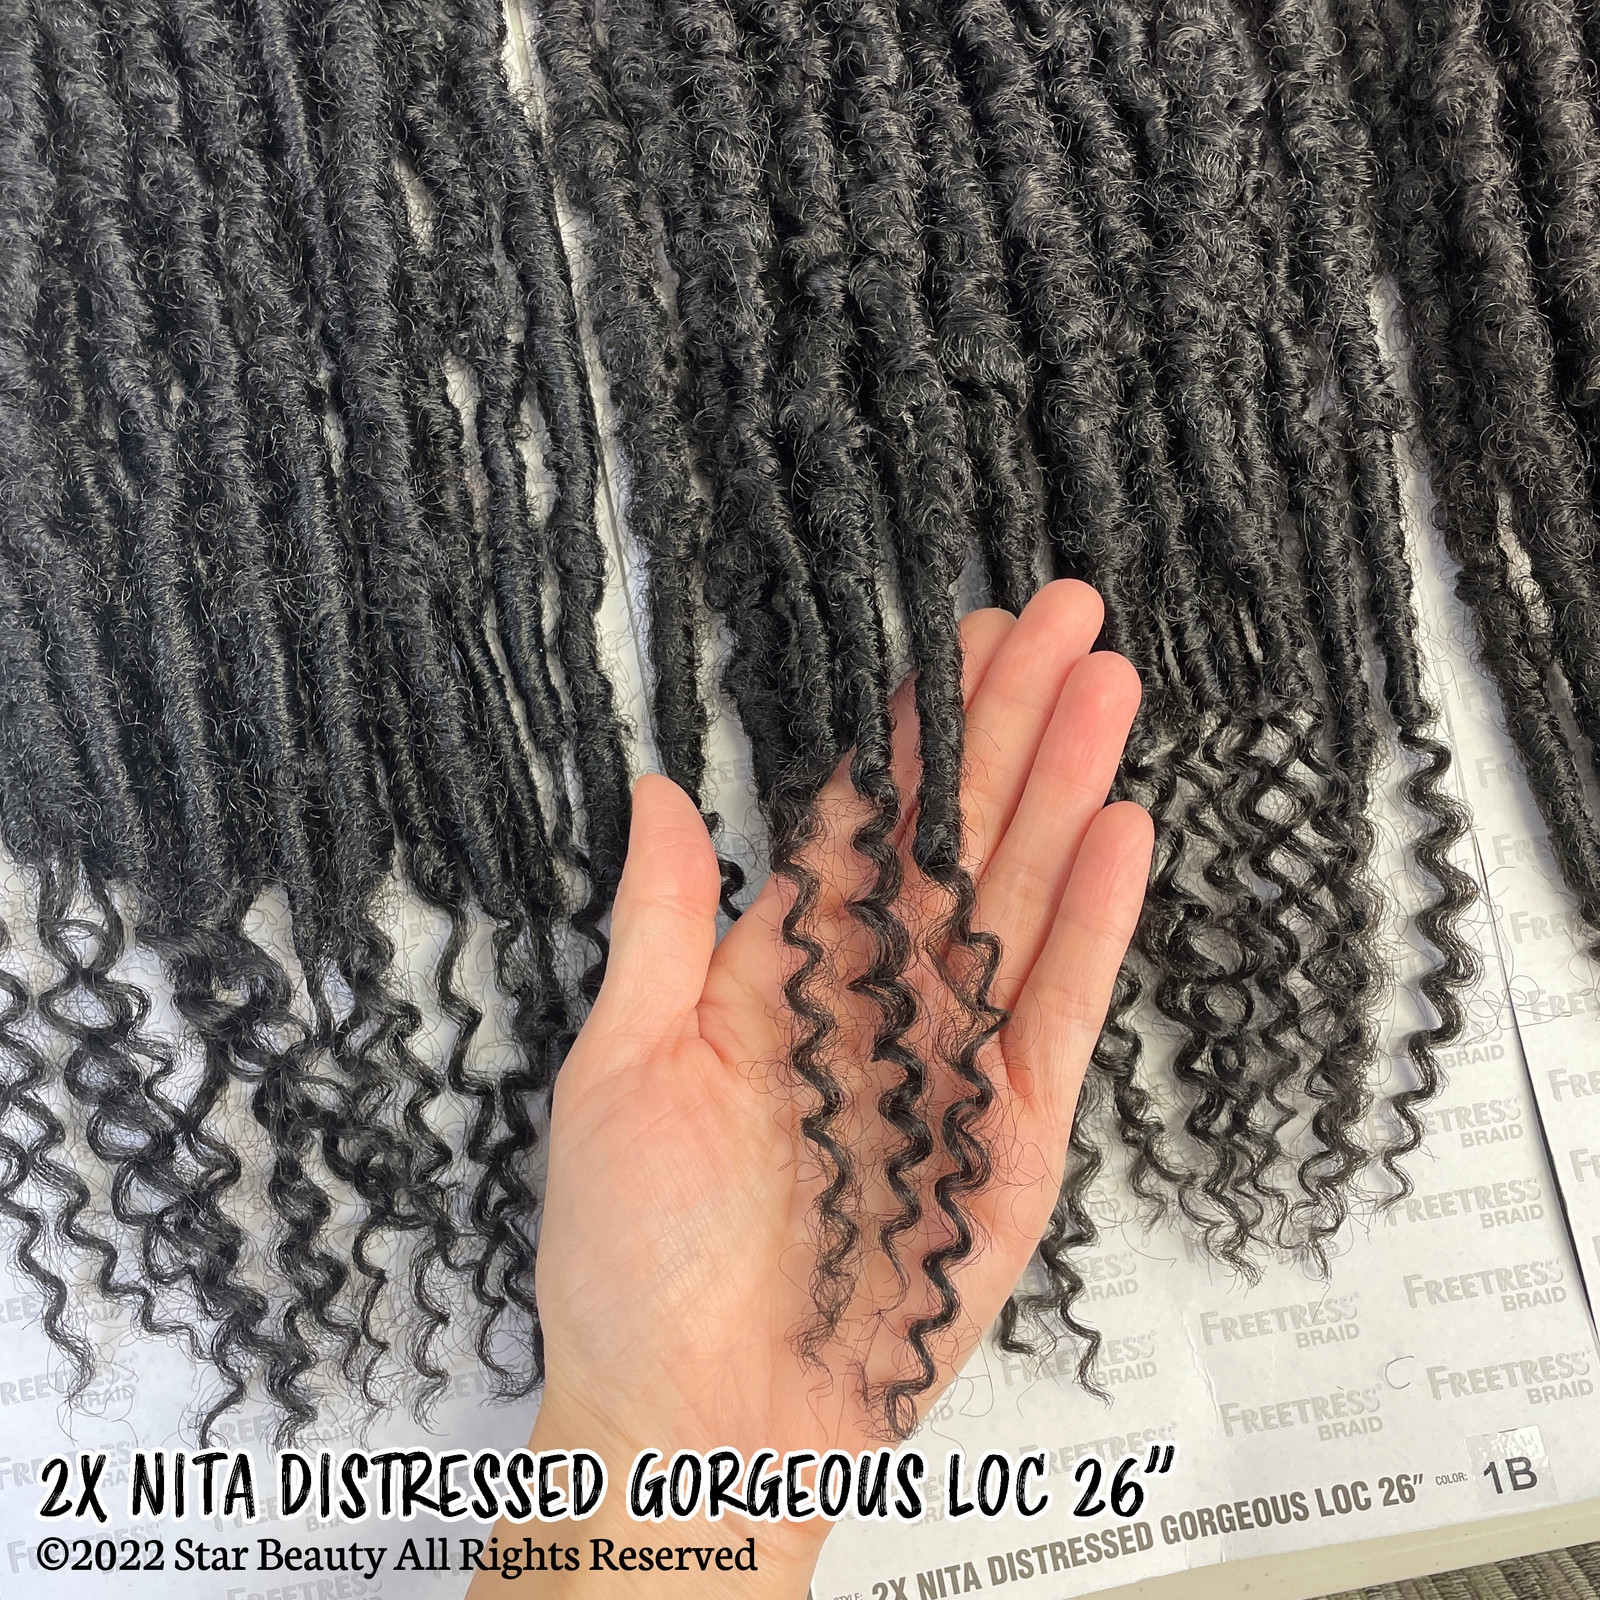 SHAKE N GO FreeTress Synthetic Hair Crochet Braids - 3X REBEL BOHO